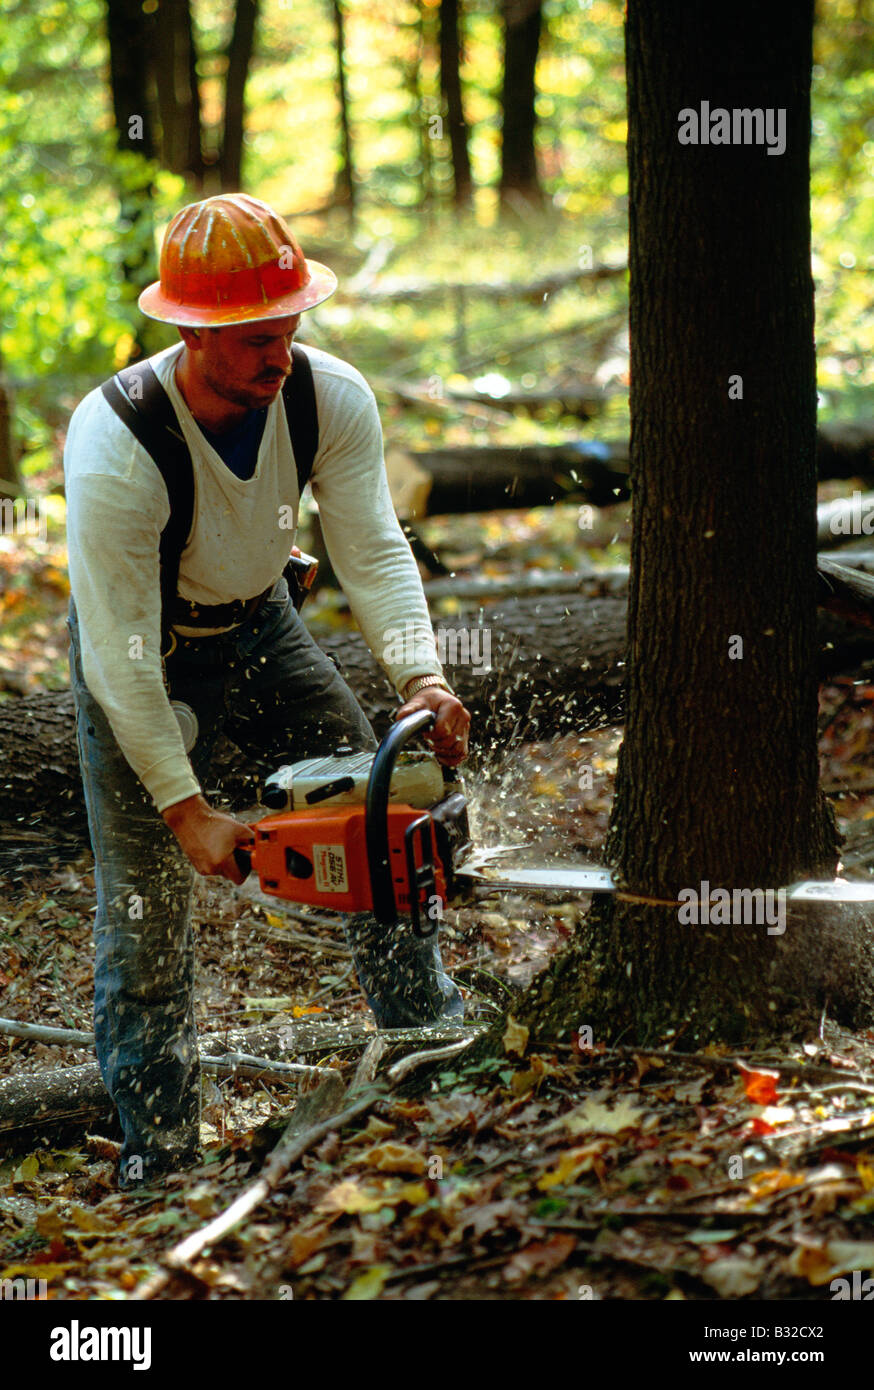 Holzfäller selektiv schneiden Prime Laubbäumen mit einer Kettensäge im US-Bundesstaat Pennsylvania Wald, USA Stockfoto